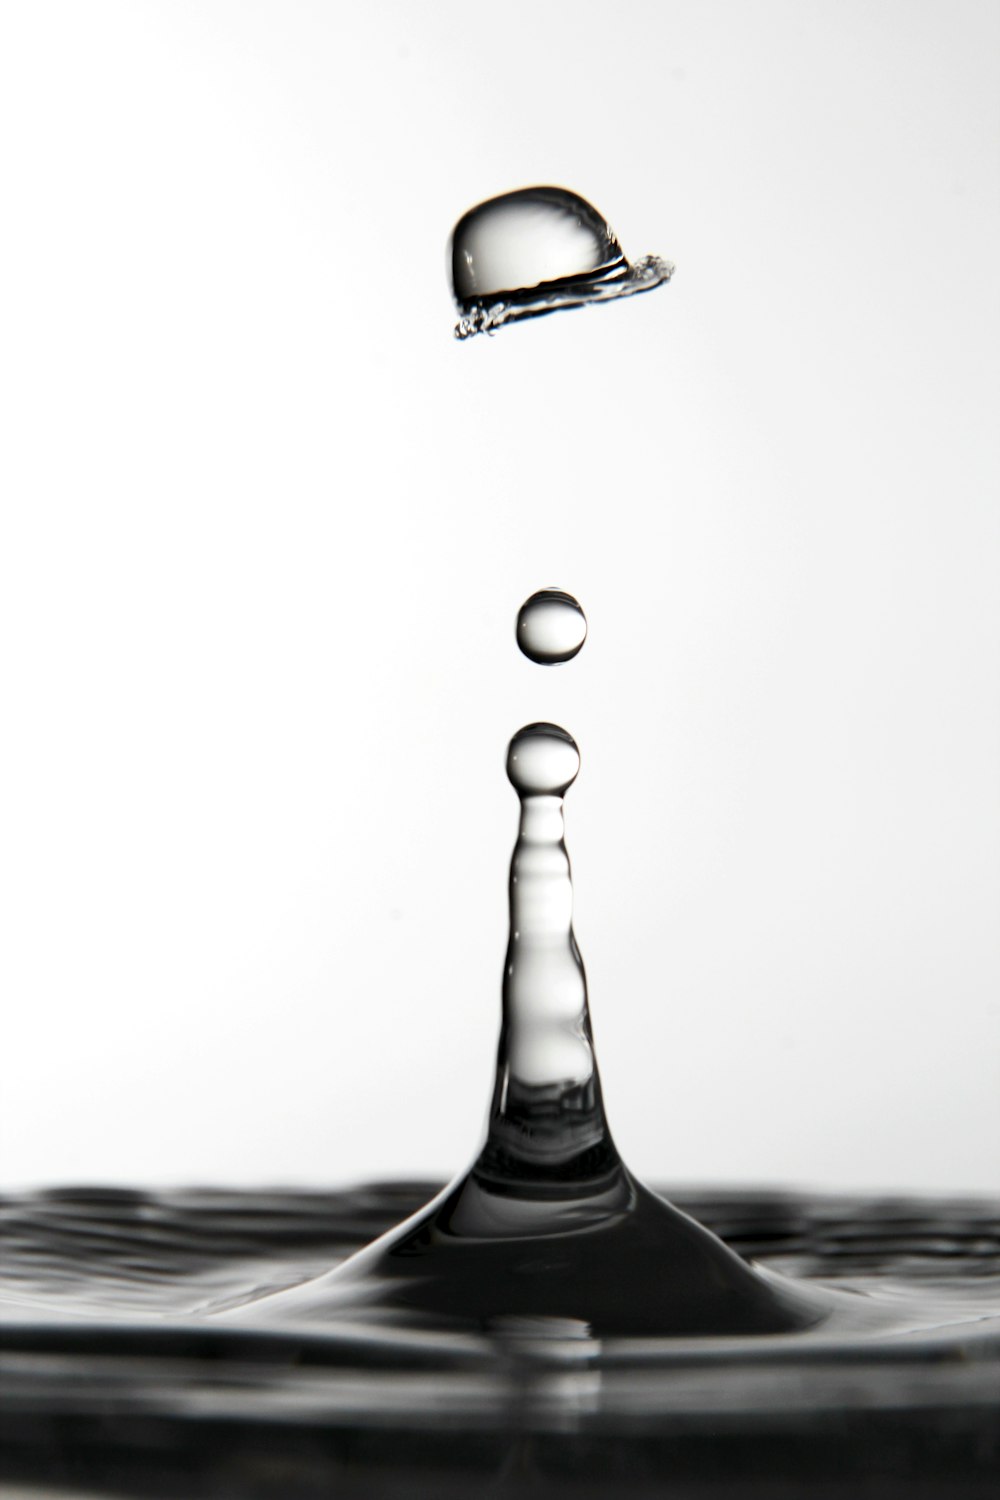 File:Water drop impact on a water-surface - (1).jpg - Wikimedia